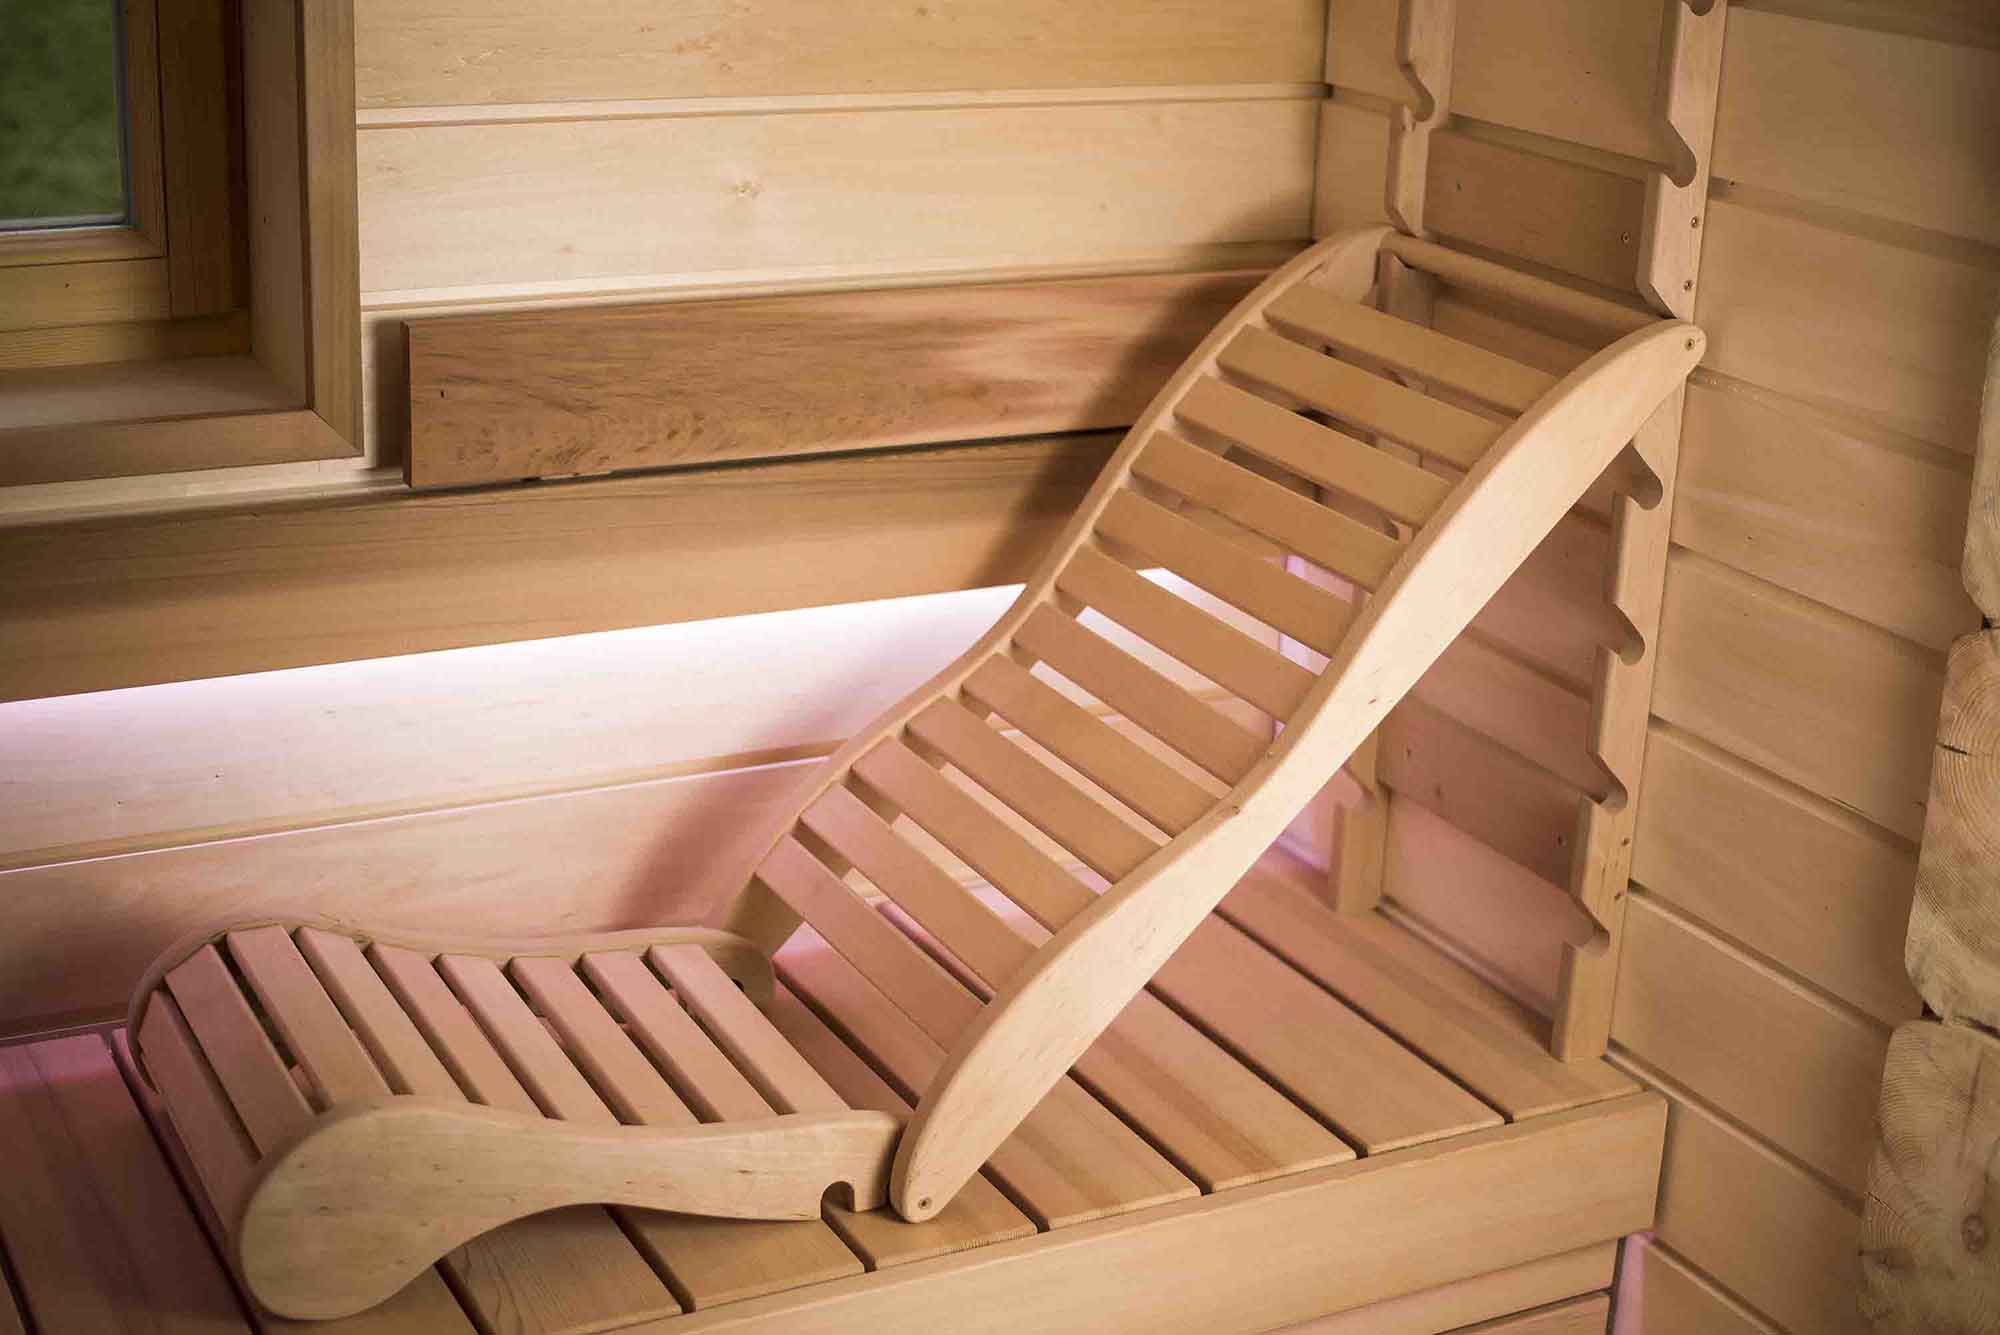 Buy a sauna bed in Israel on the bulletin board